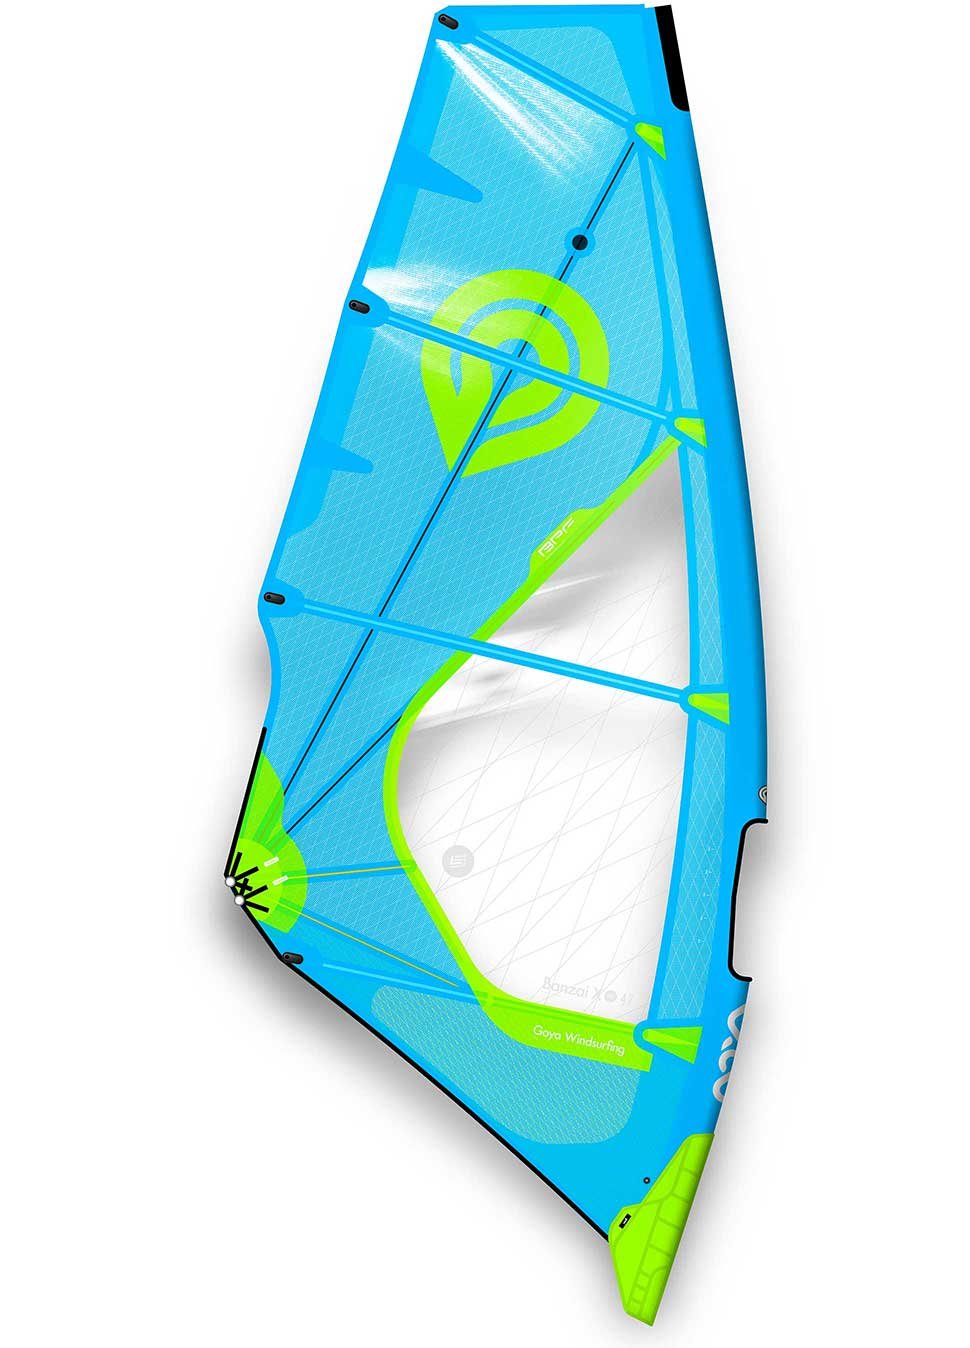 Sails - Banzai X Pro - Goya Windsurfing